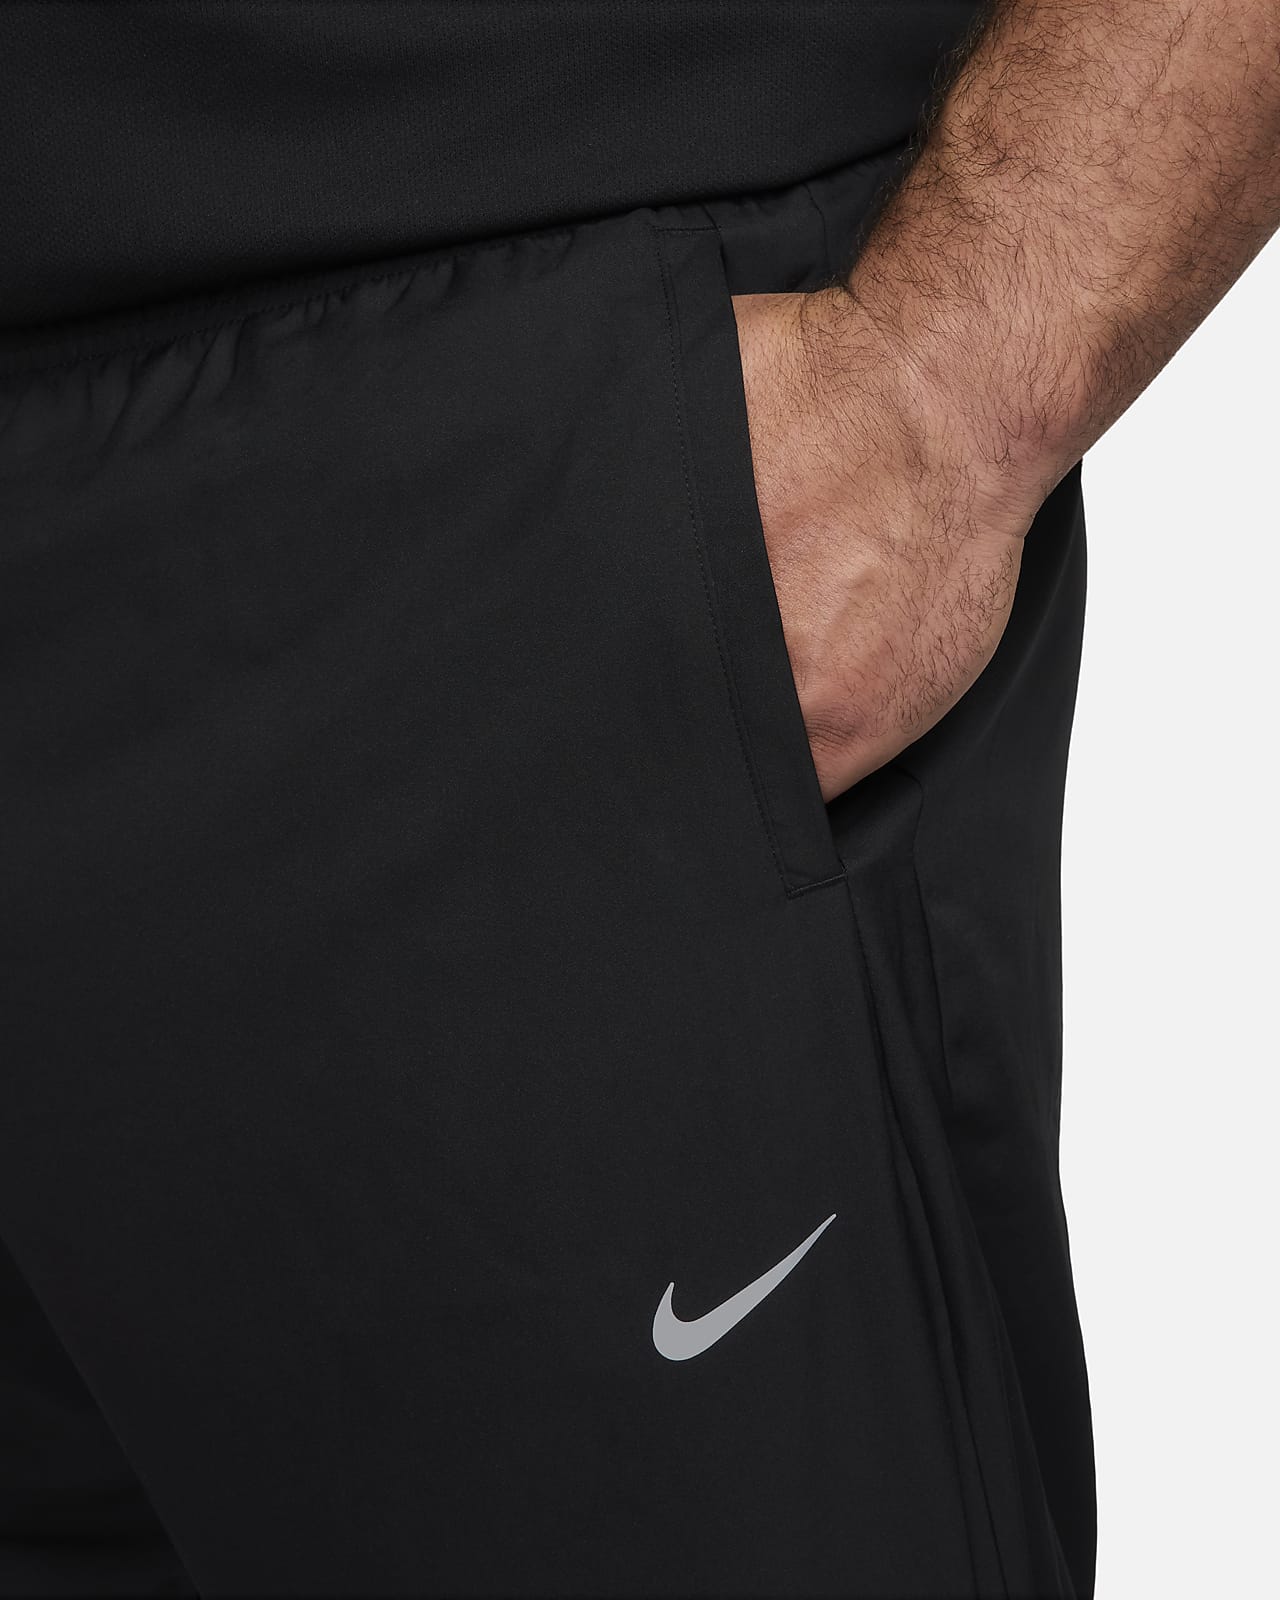 Nike Challenger Men's Dri-FIT Woven Running Trousers. Nike CA